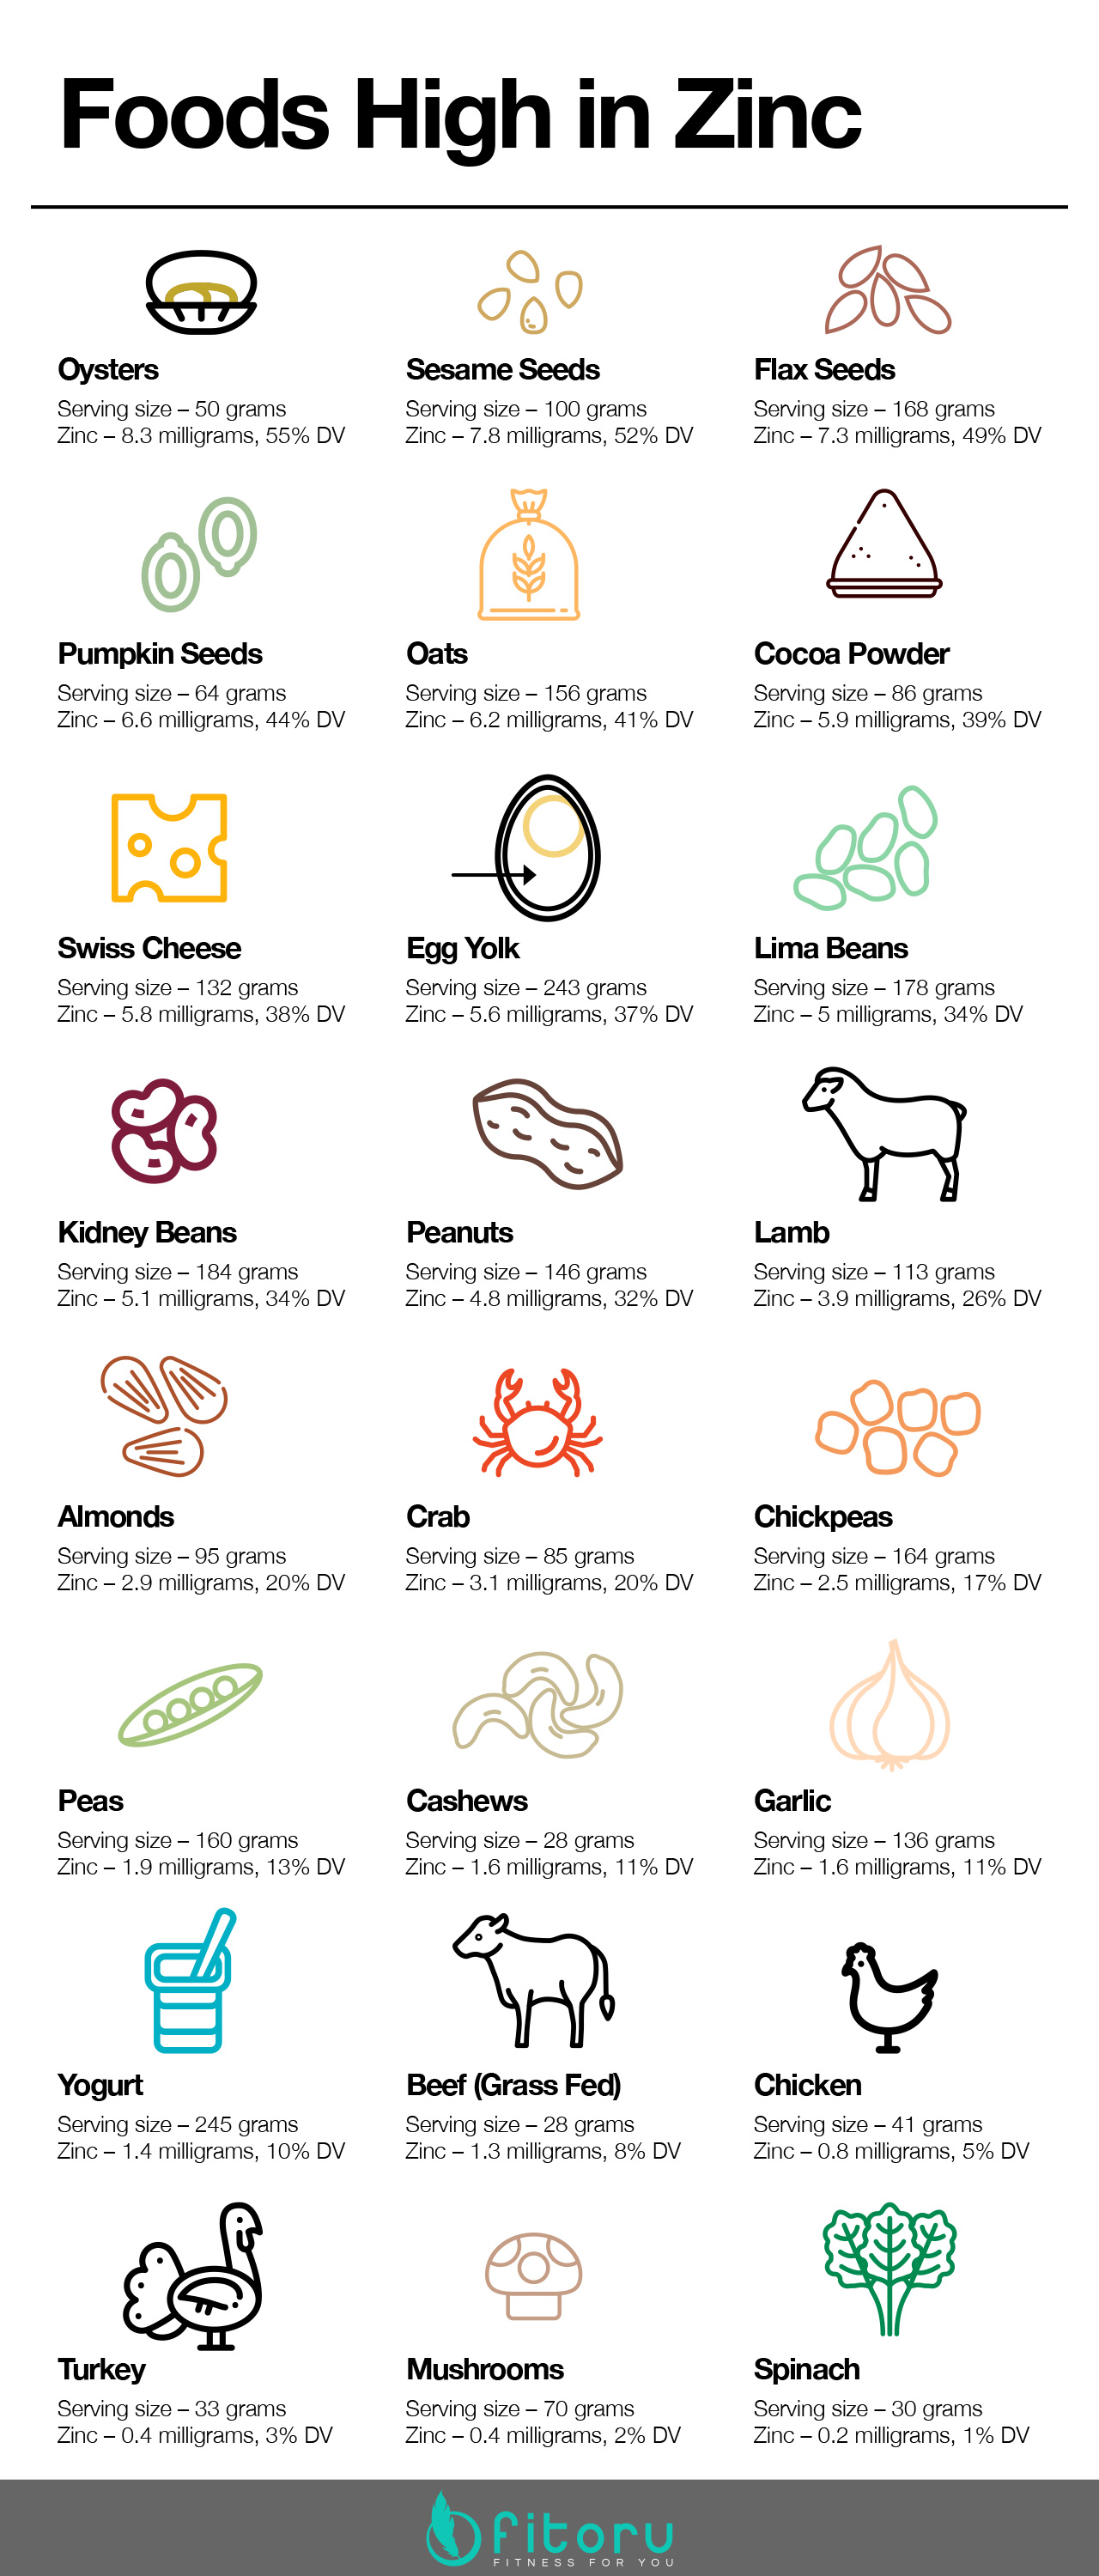 A comprehensive list of foods high in zinc.